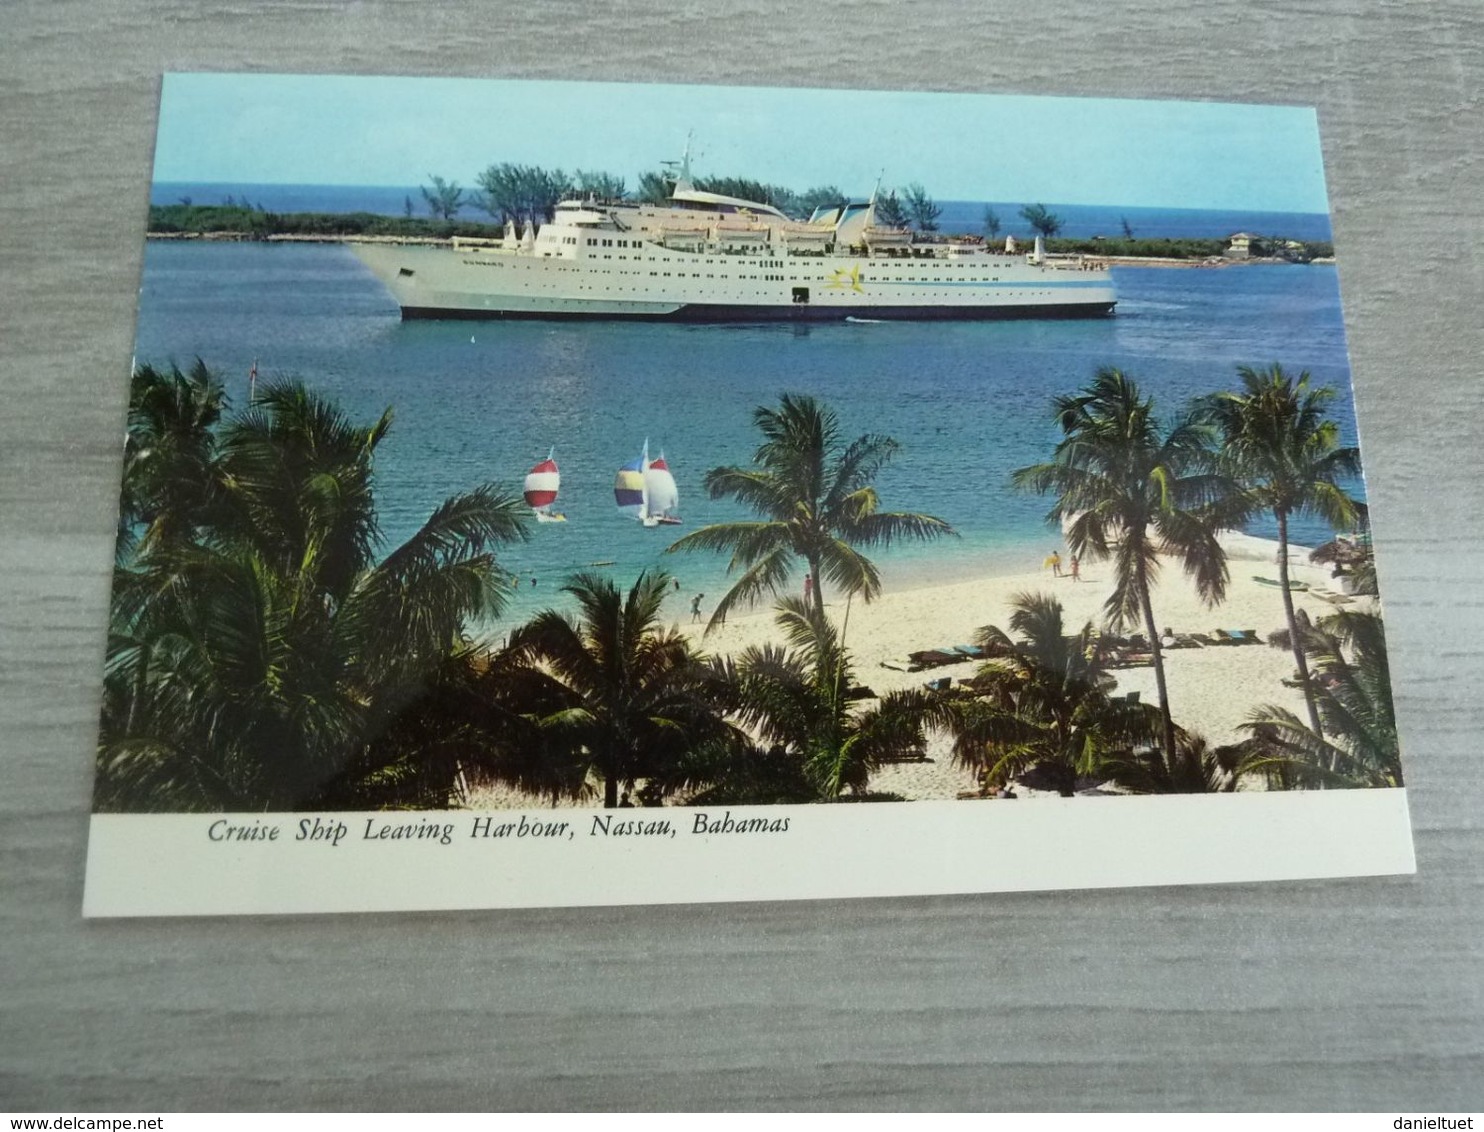 Nassau - Cruise Ship Leaving Harbour - X111571 - Editions Calypso - Année 1980 - - Bahamas